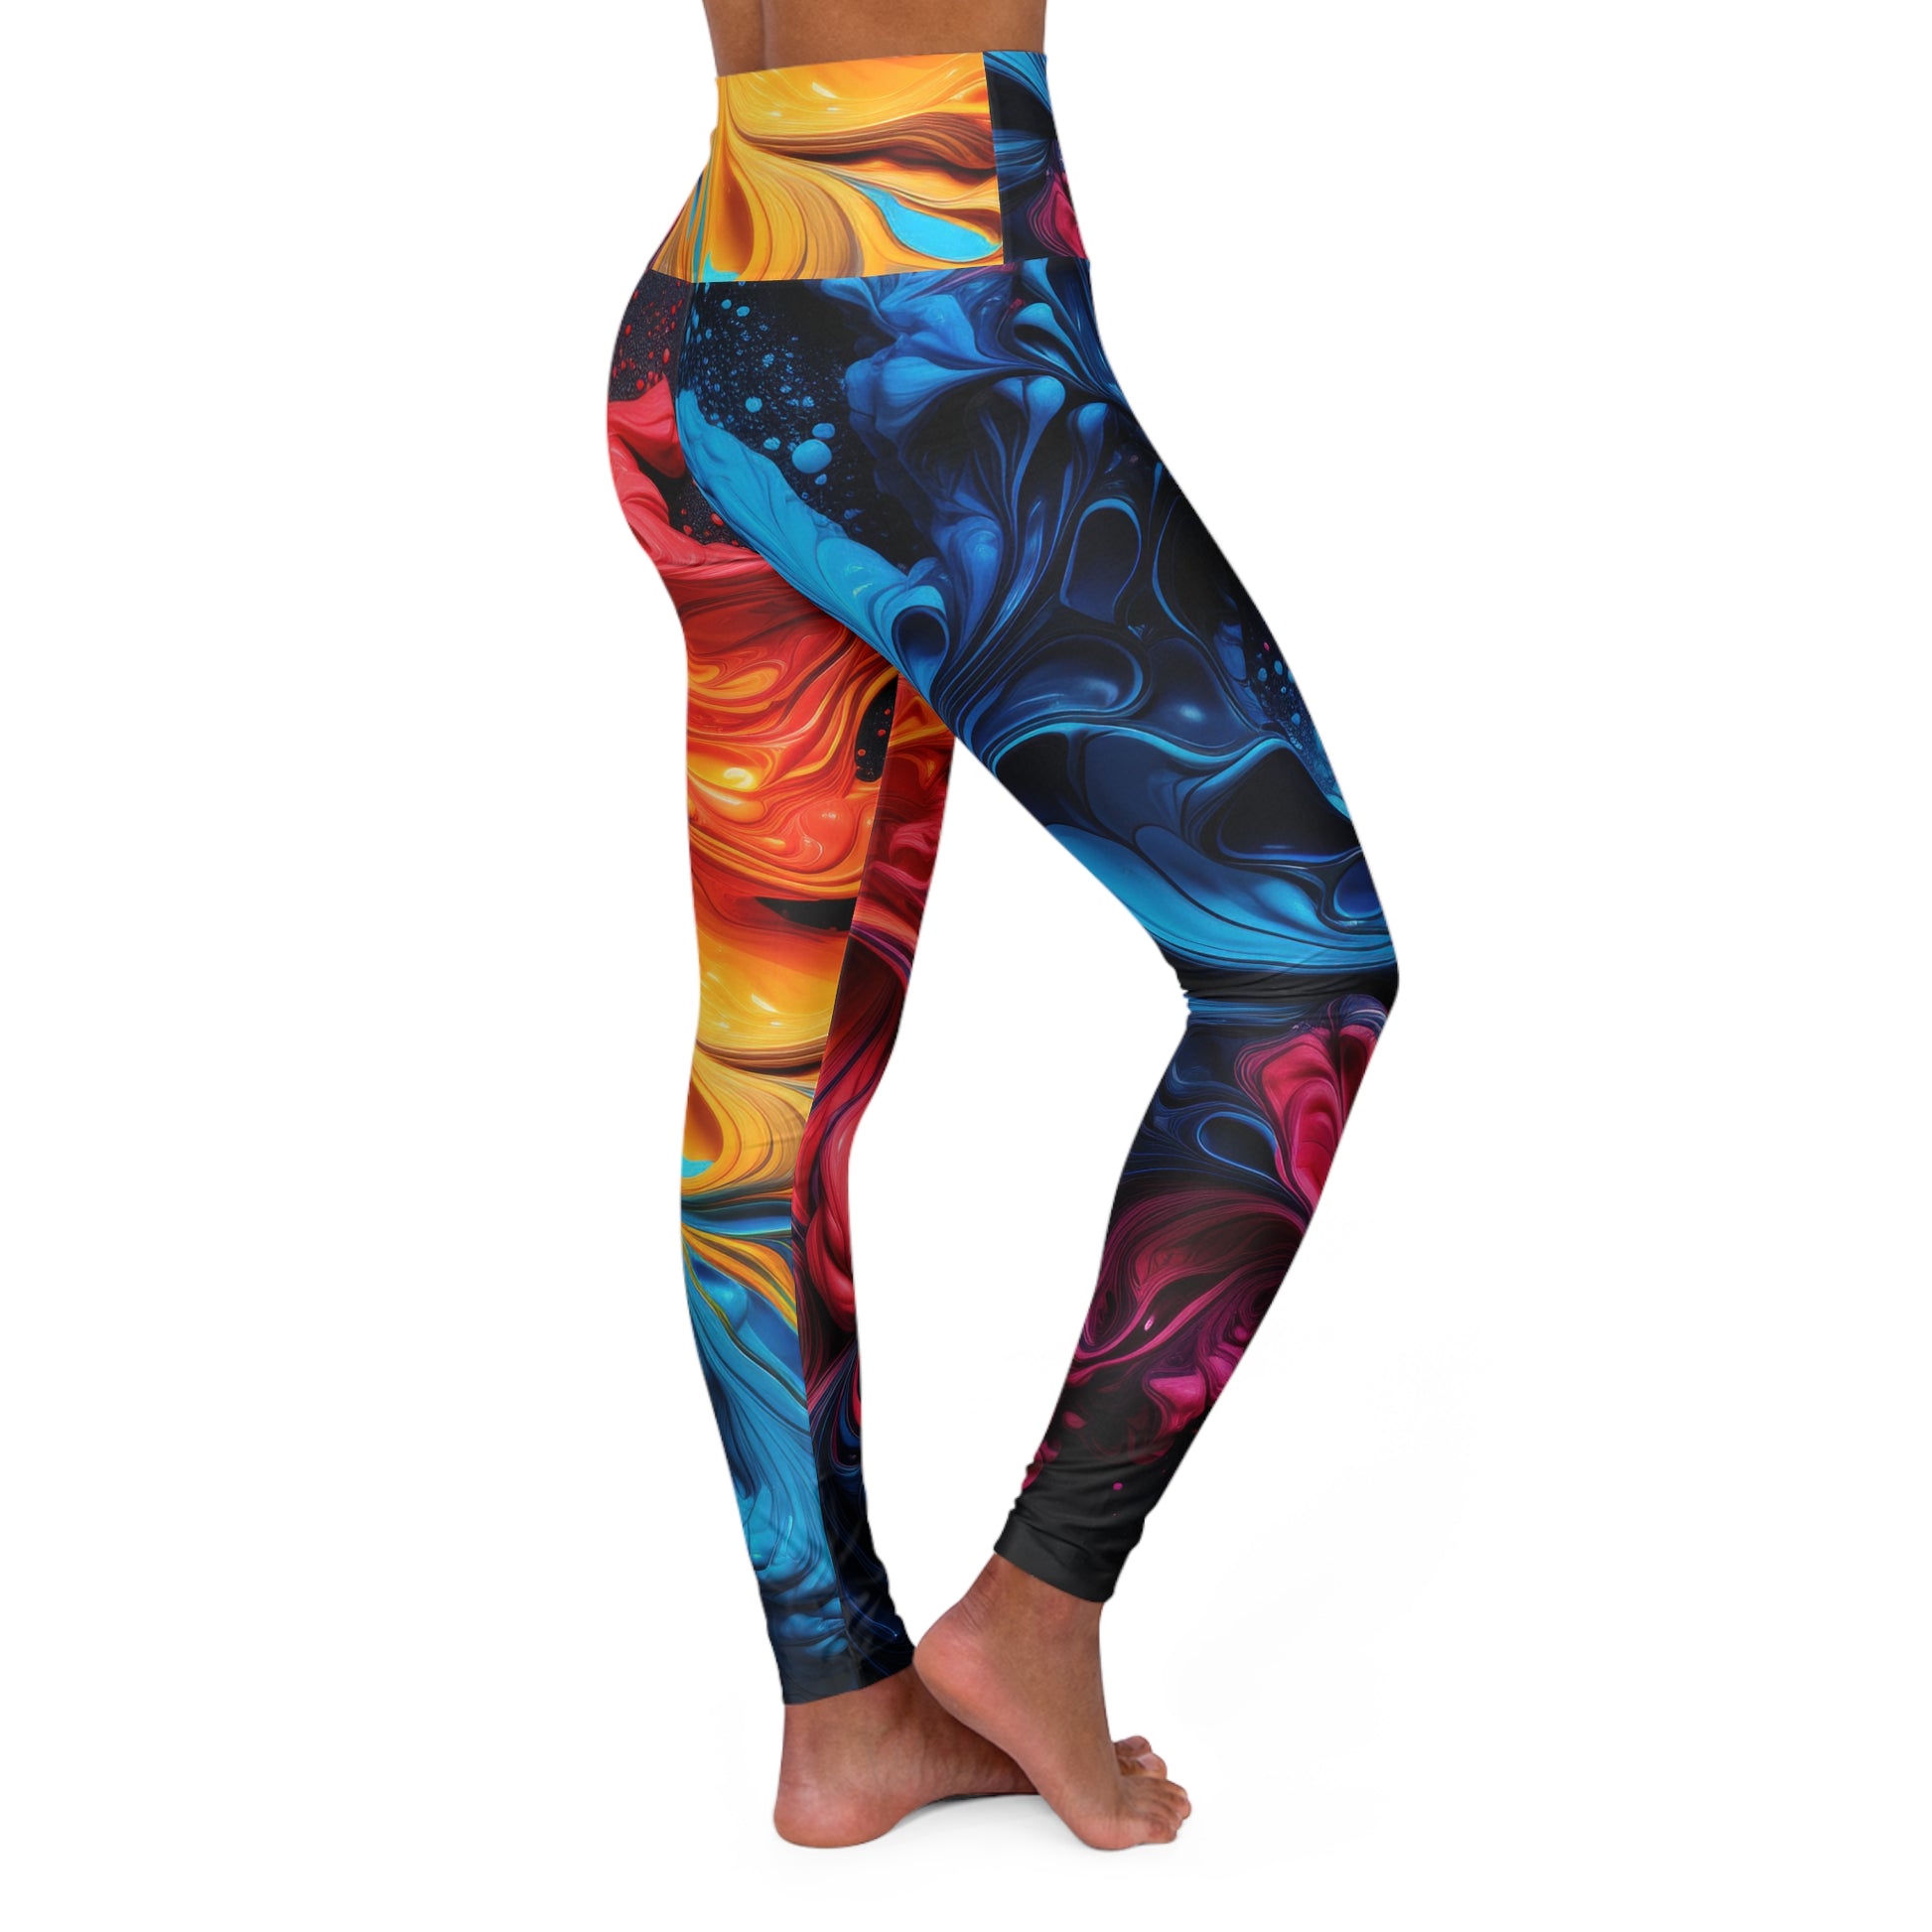 Stylesters Multi Colored Print Leggings - Circus Leggings - Acrobatics,  Yoga, Acroyoga - Premium Ultra Soft Athletic Pants - What Devotion❓ -  Coolest Online Fashion Trends